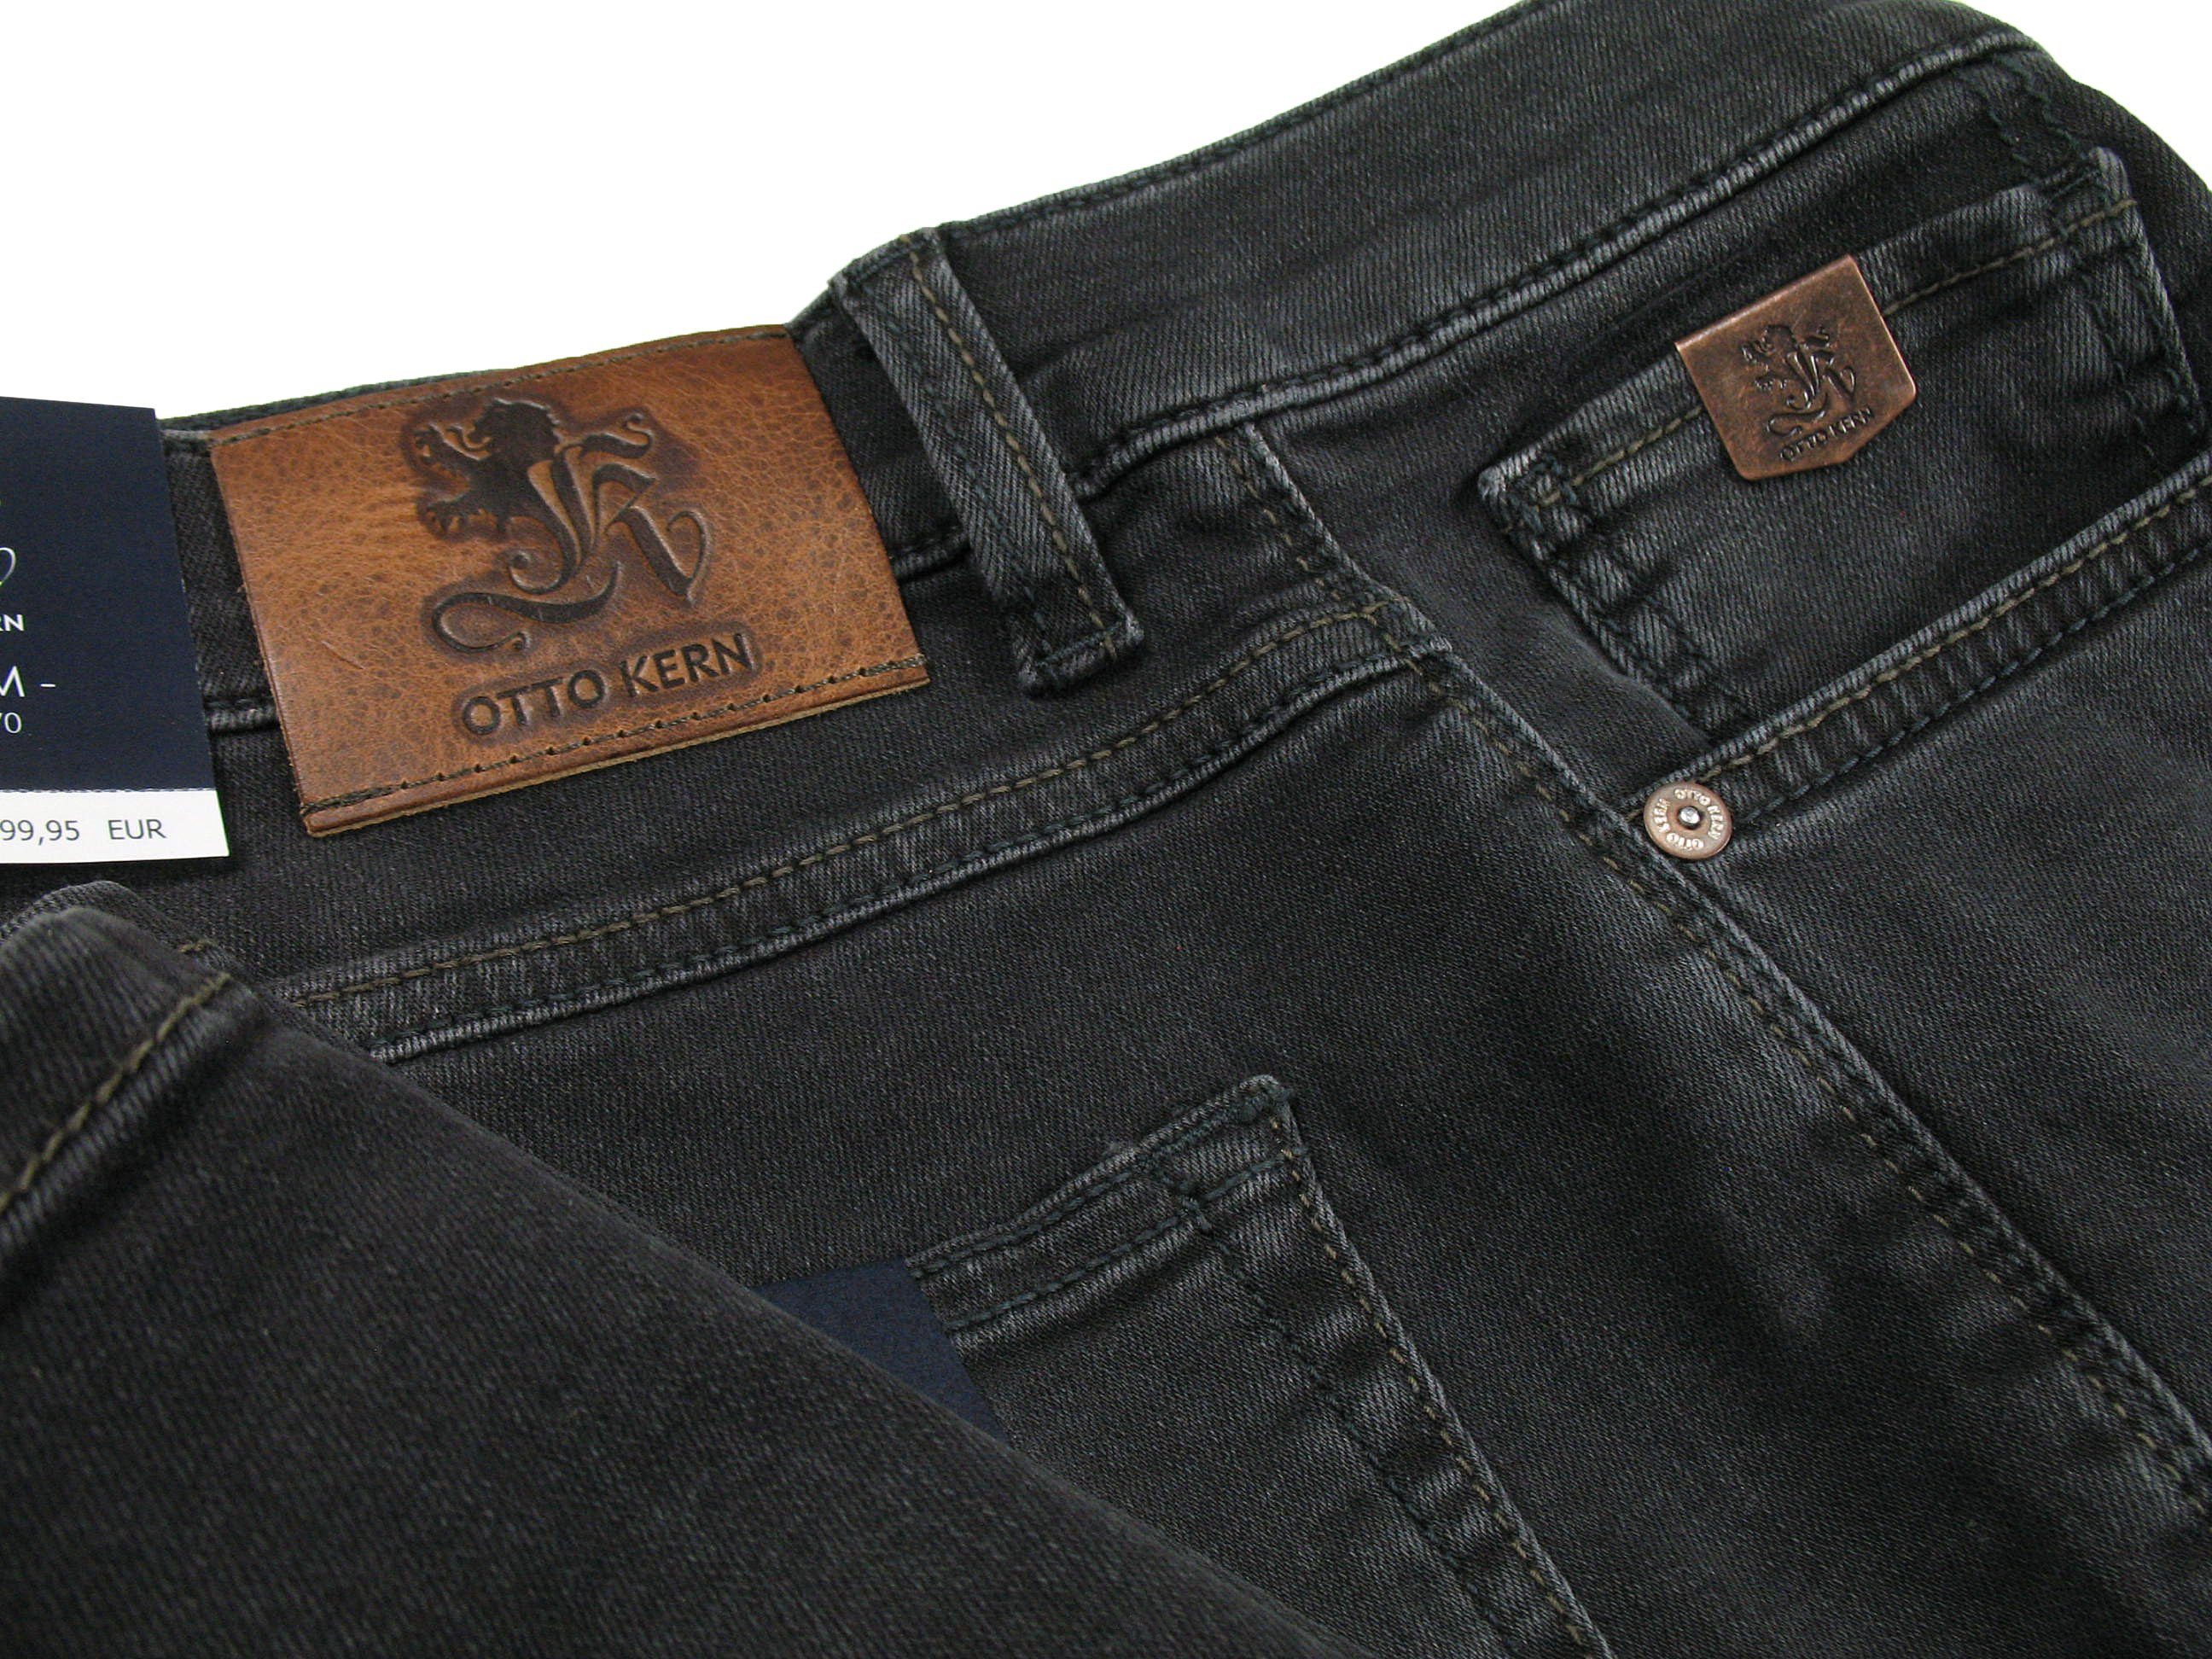 Denim Pure John Otto Kern Black Washed Kern Flex 5-Pocket-Jeans